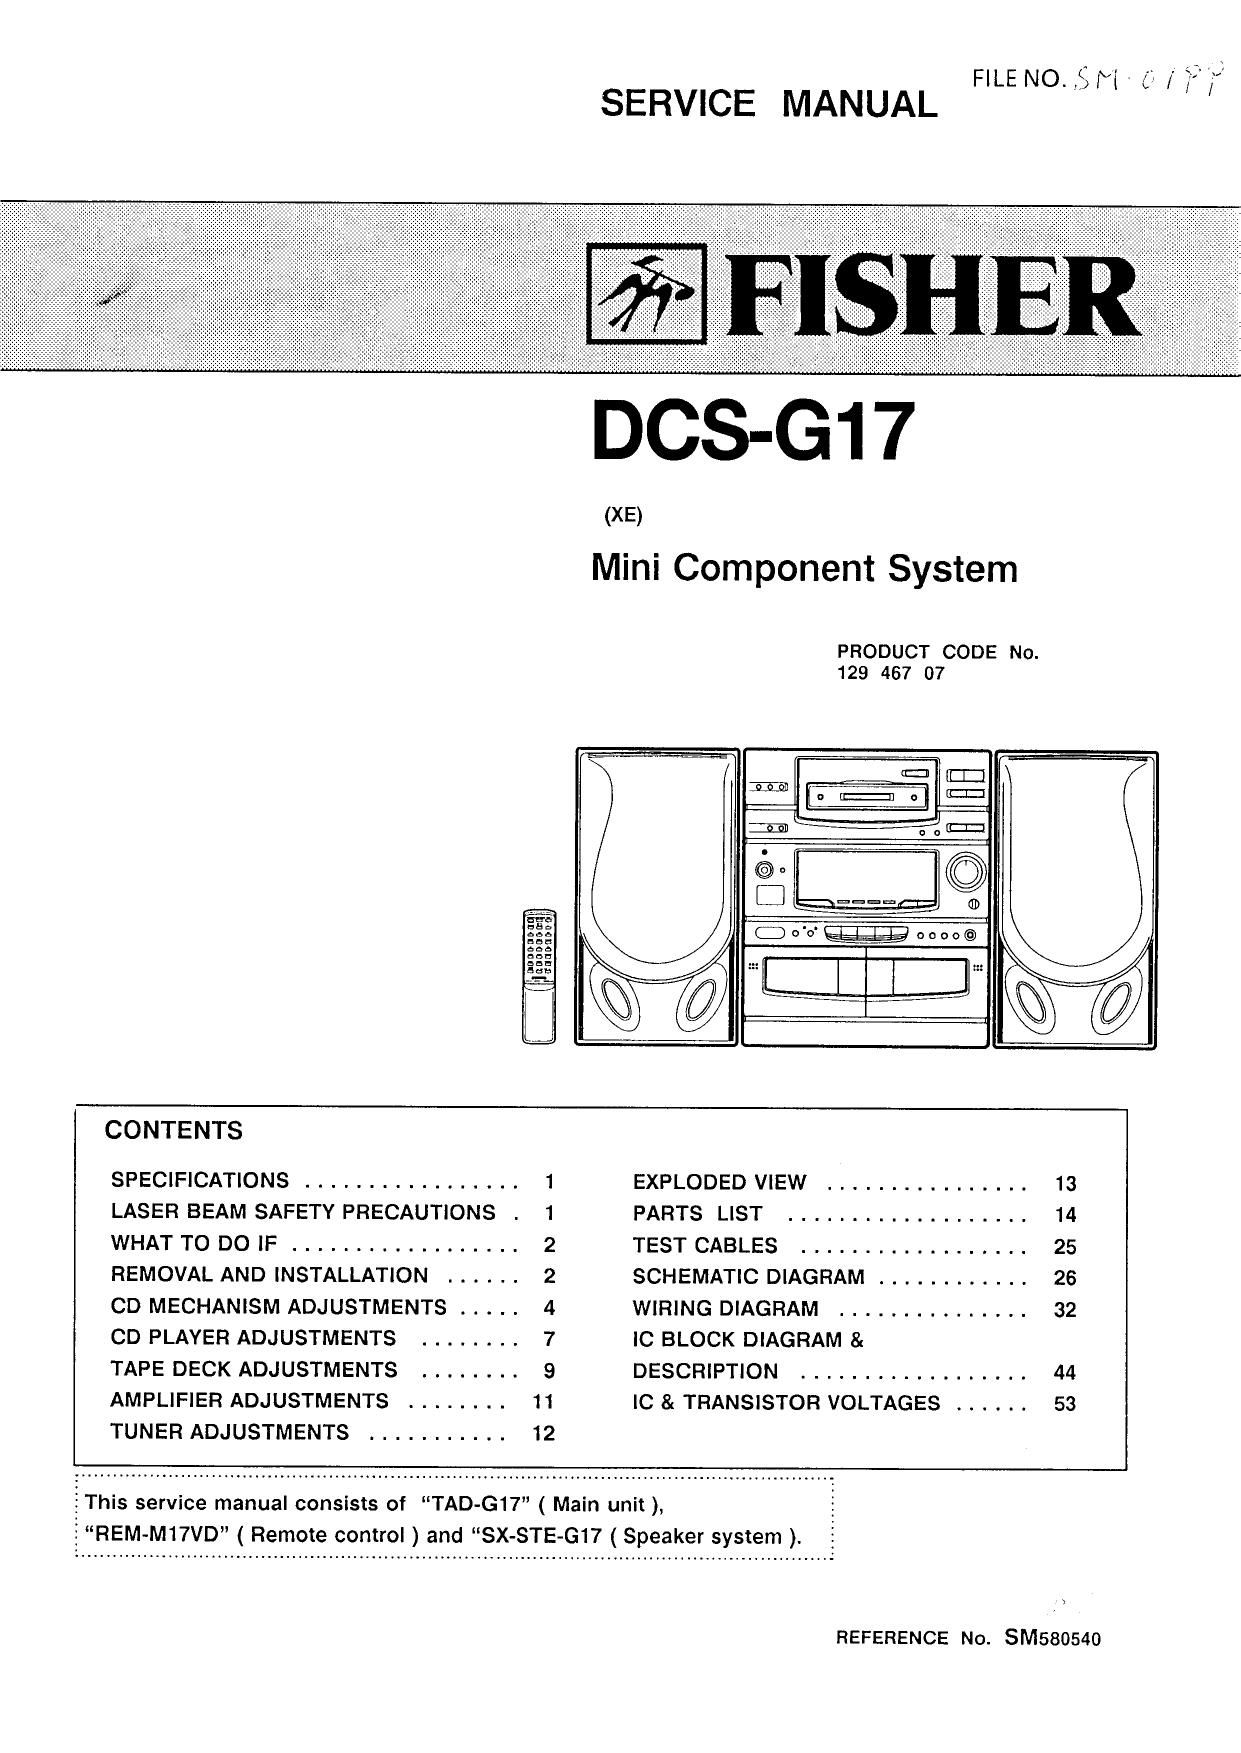 Fisher DCSG 17 Service Manual